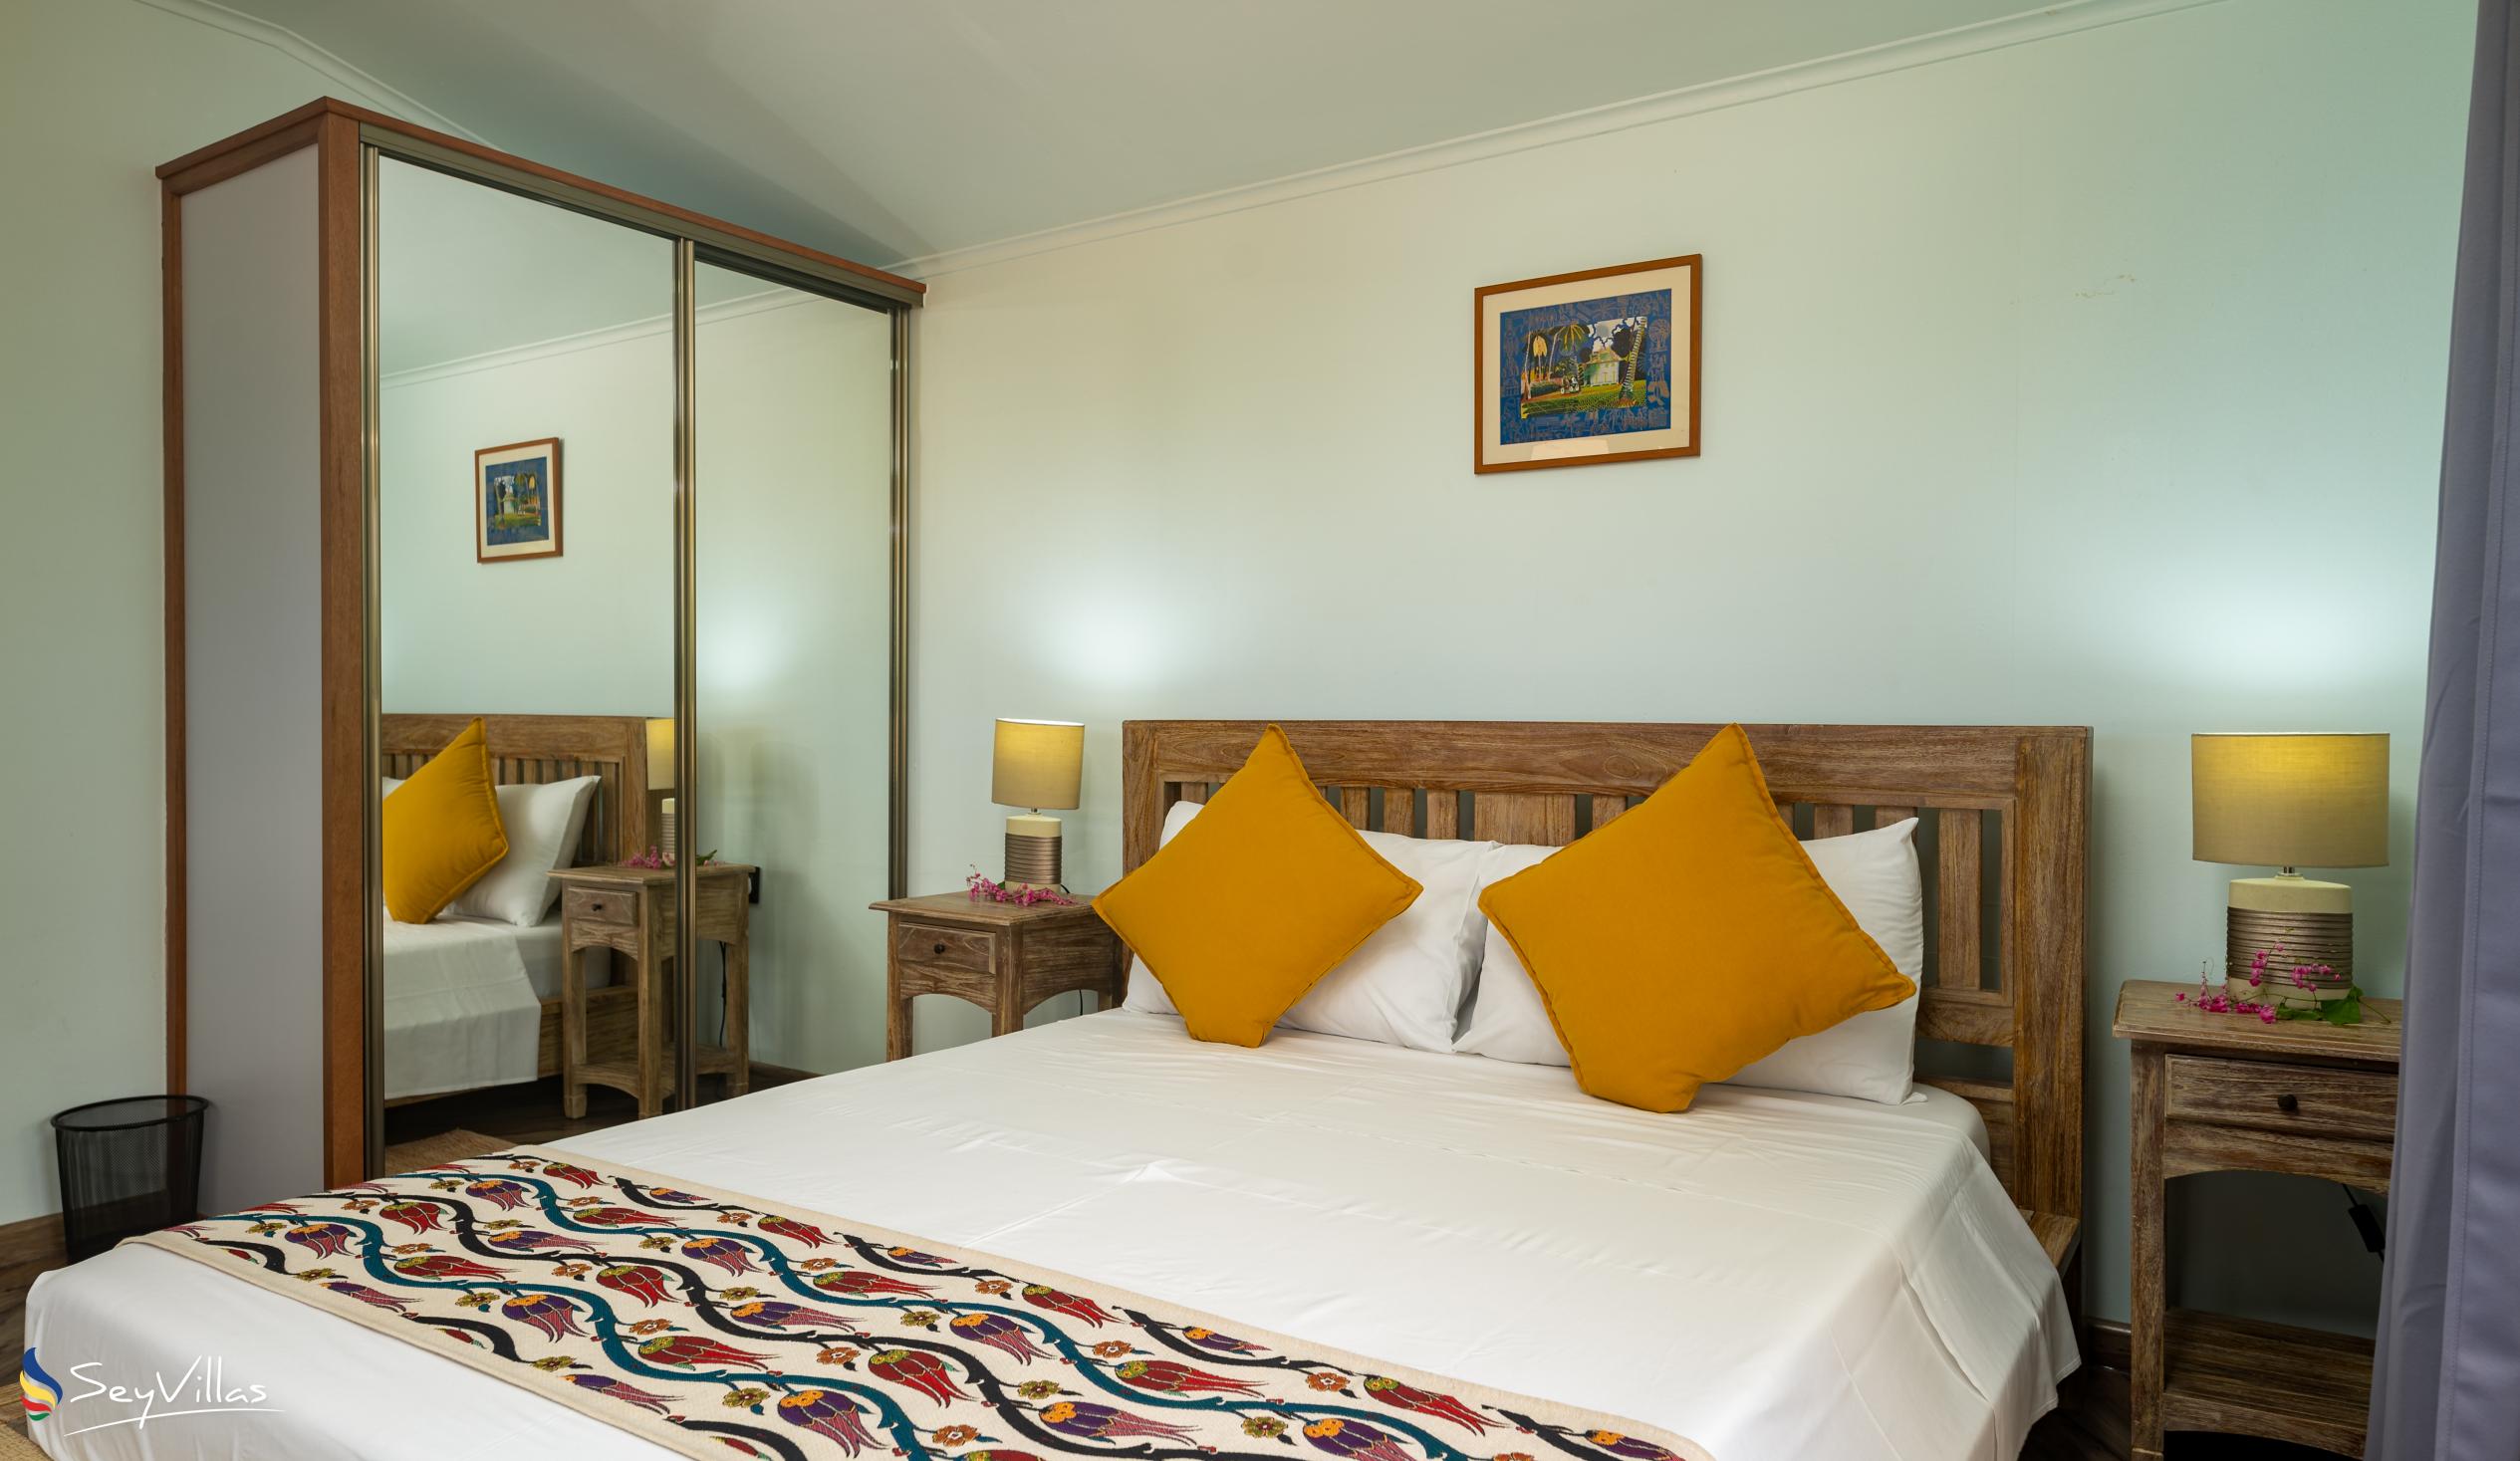 Photo 50: Cap-Sud Self Catering - 3-Bedroom Apartment - Mahé (Seychelles)